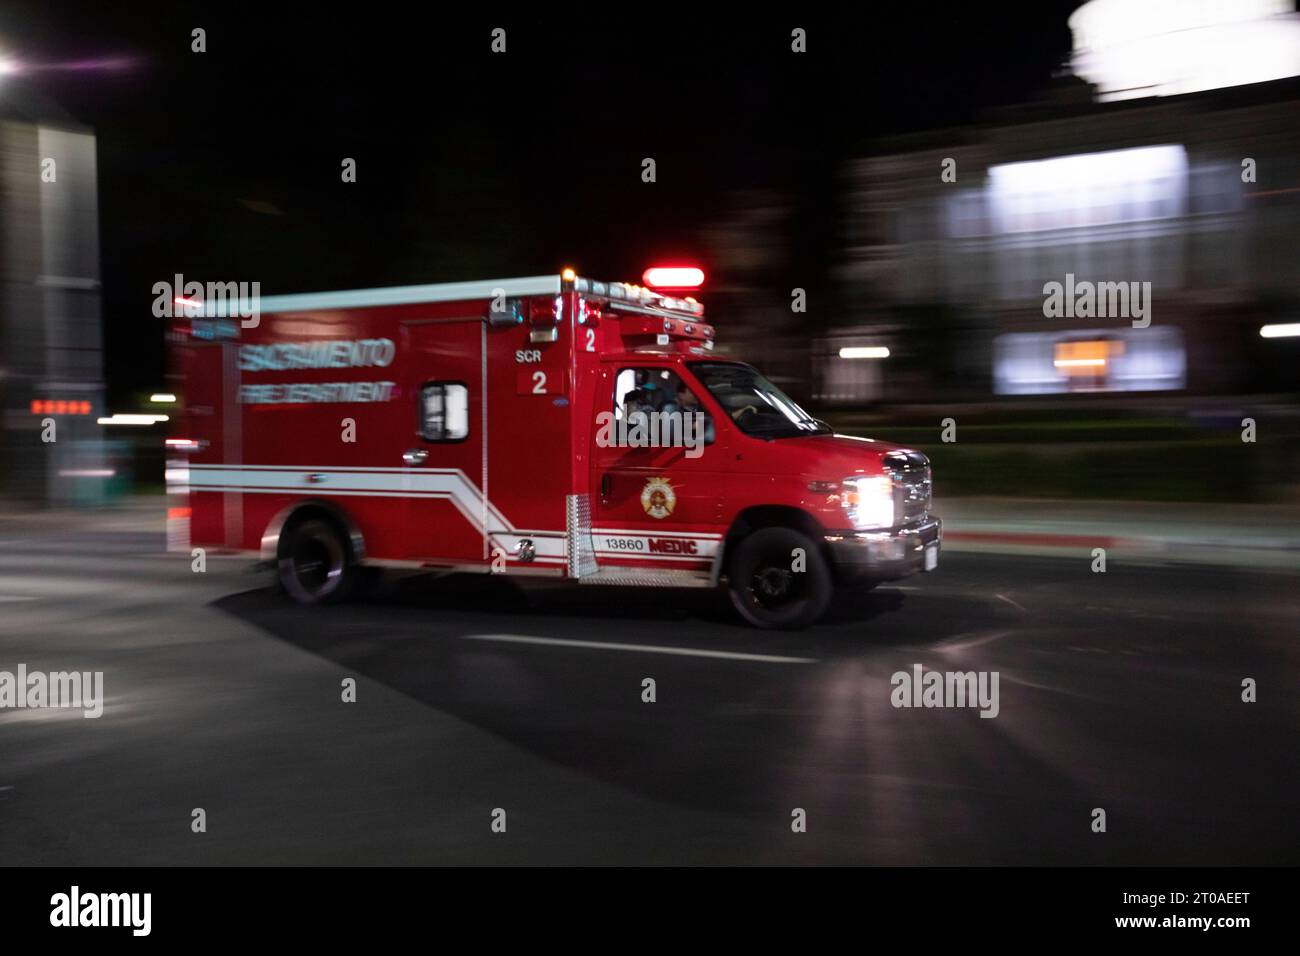 Sacramento, California, USA - July 16, 2021: A Sacramento Fire Department Ambulance races to the scene of an emergency. Stock Photo